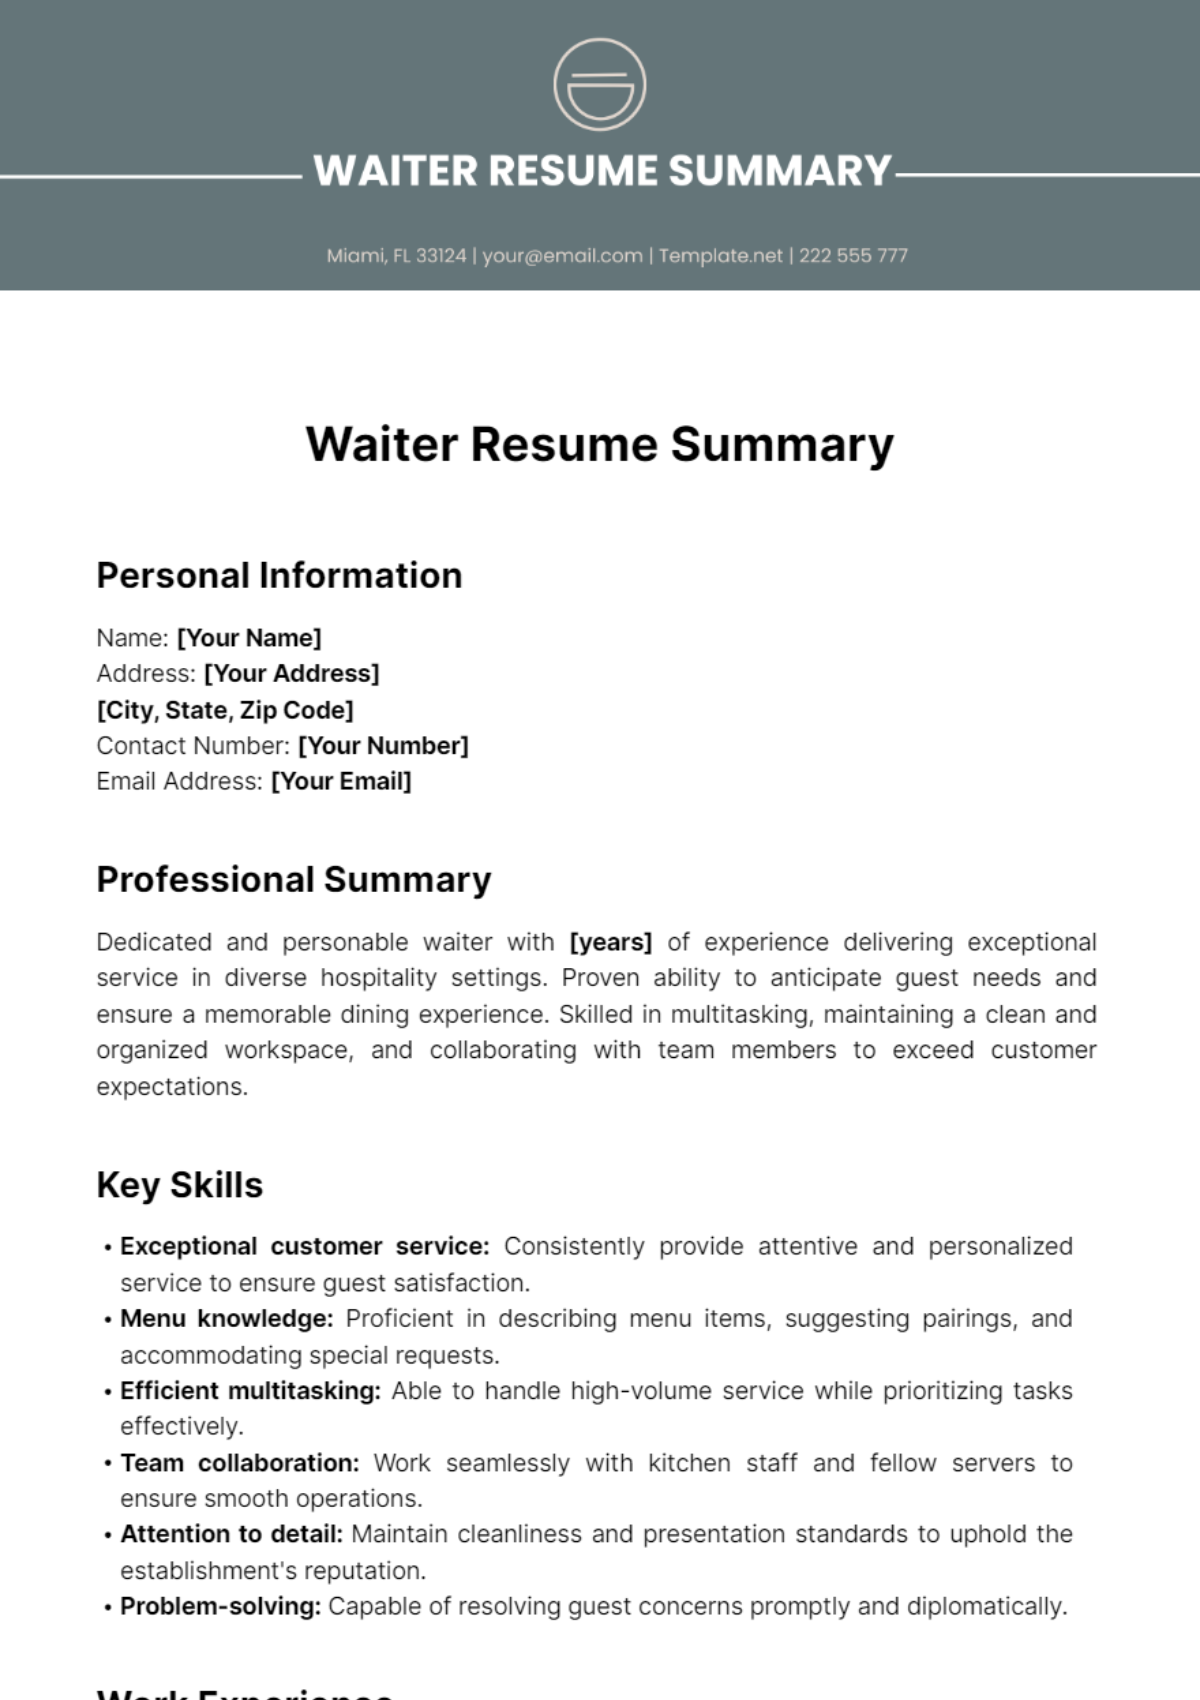 Waiter Resume Summary Template